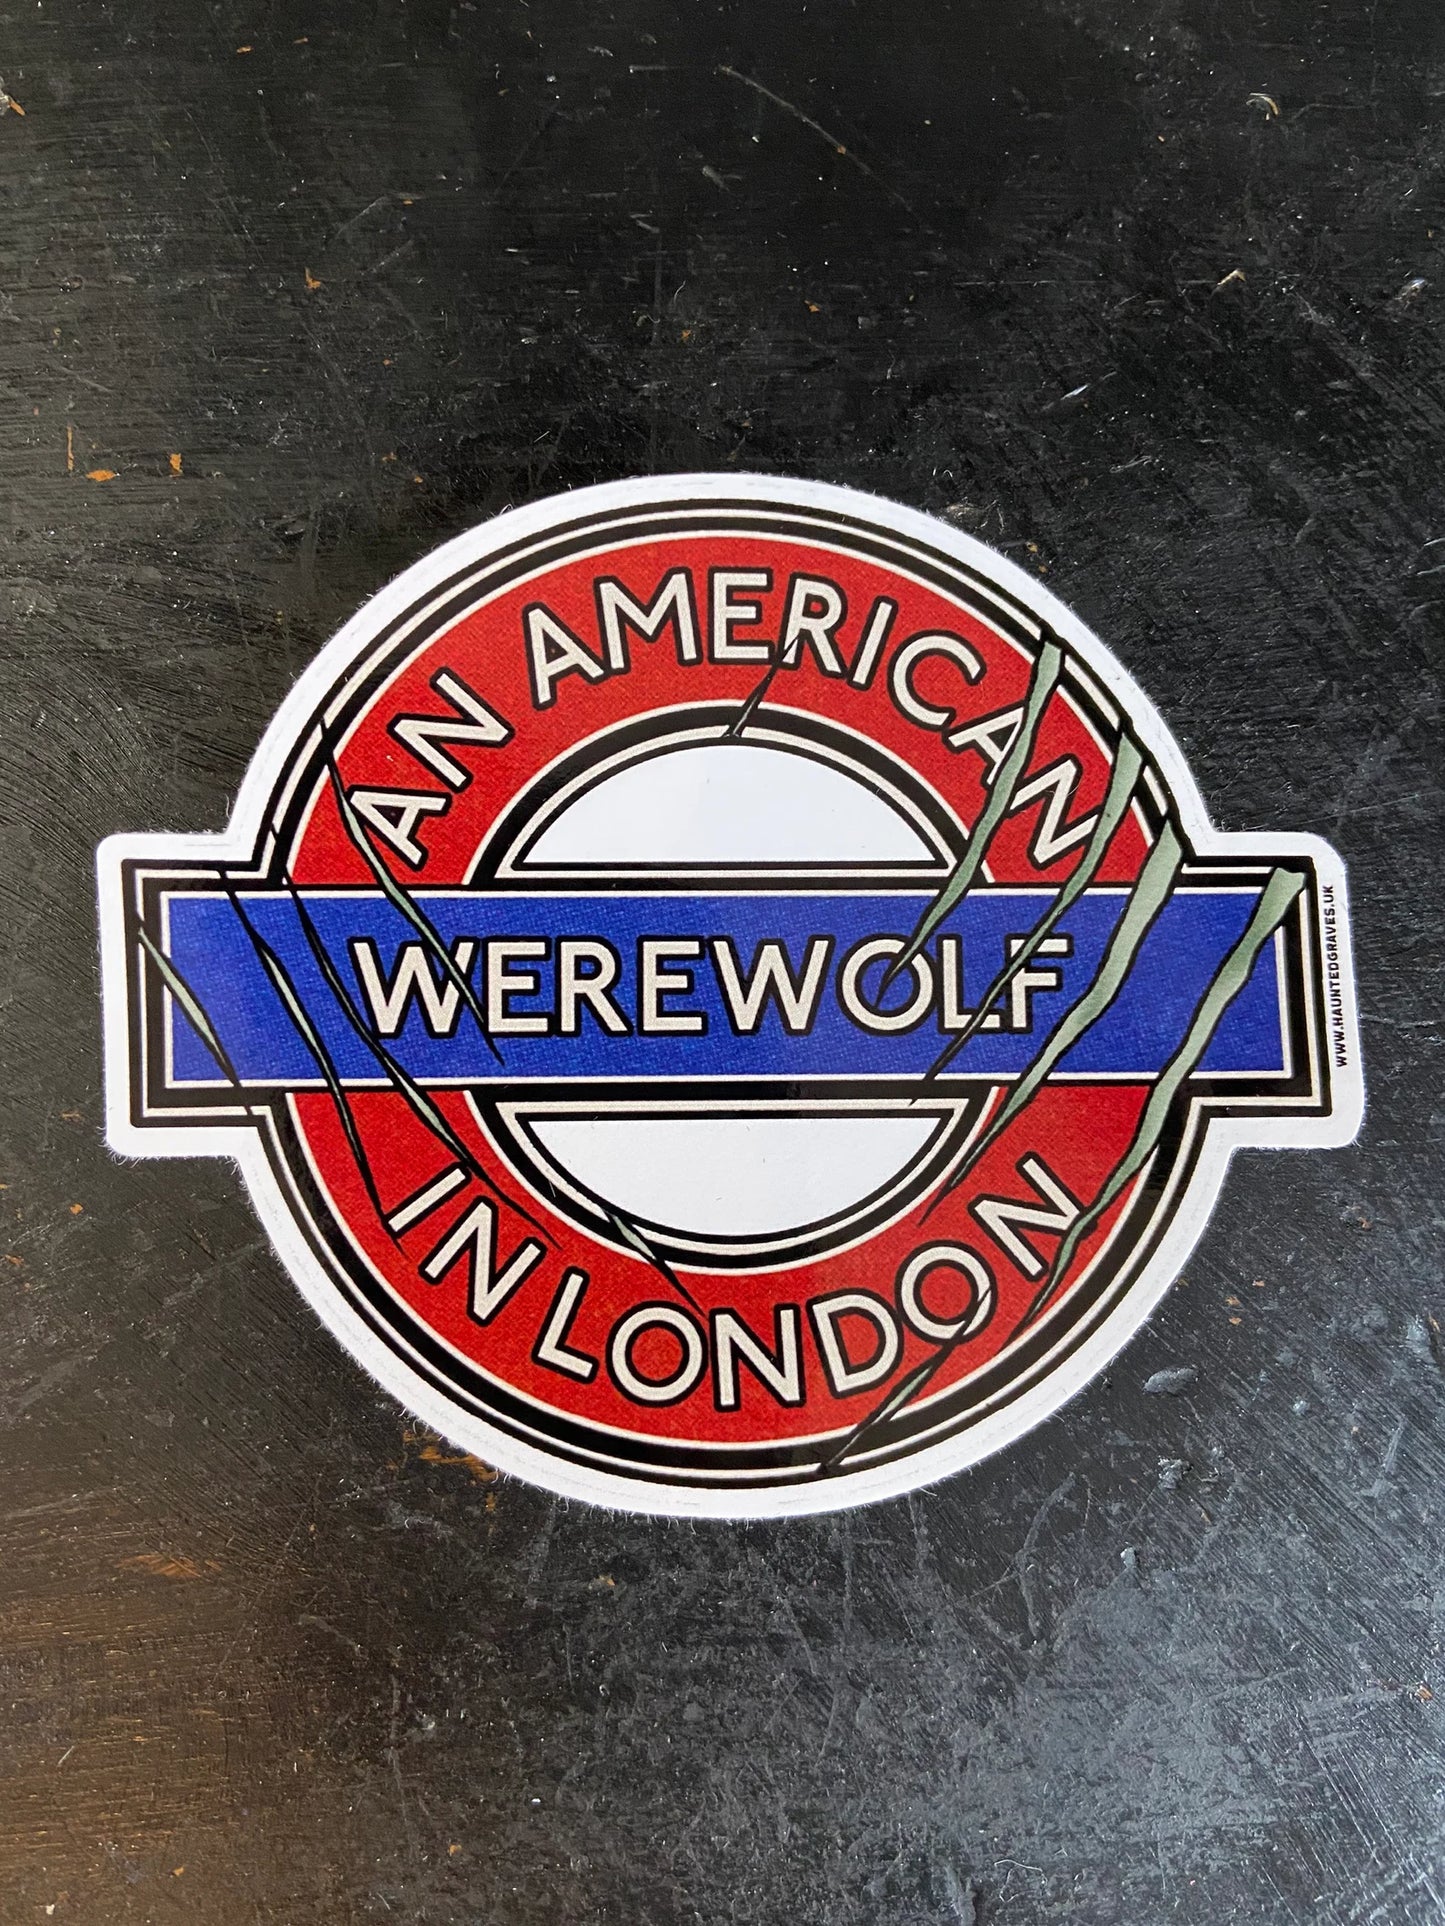 An American Werewolf in London inspired HORROR MOVIE sticker